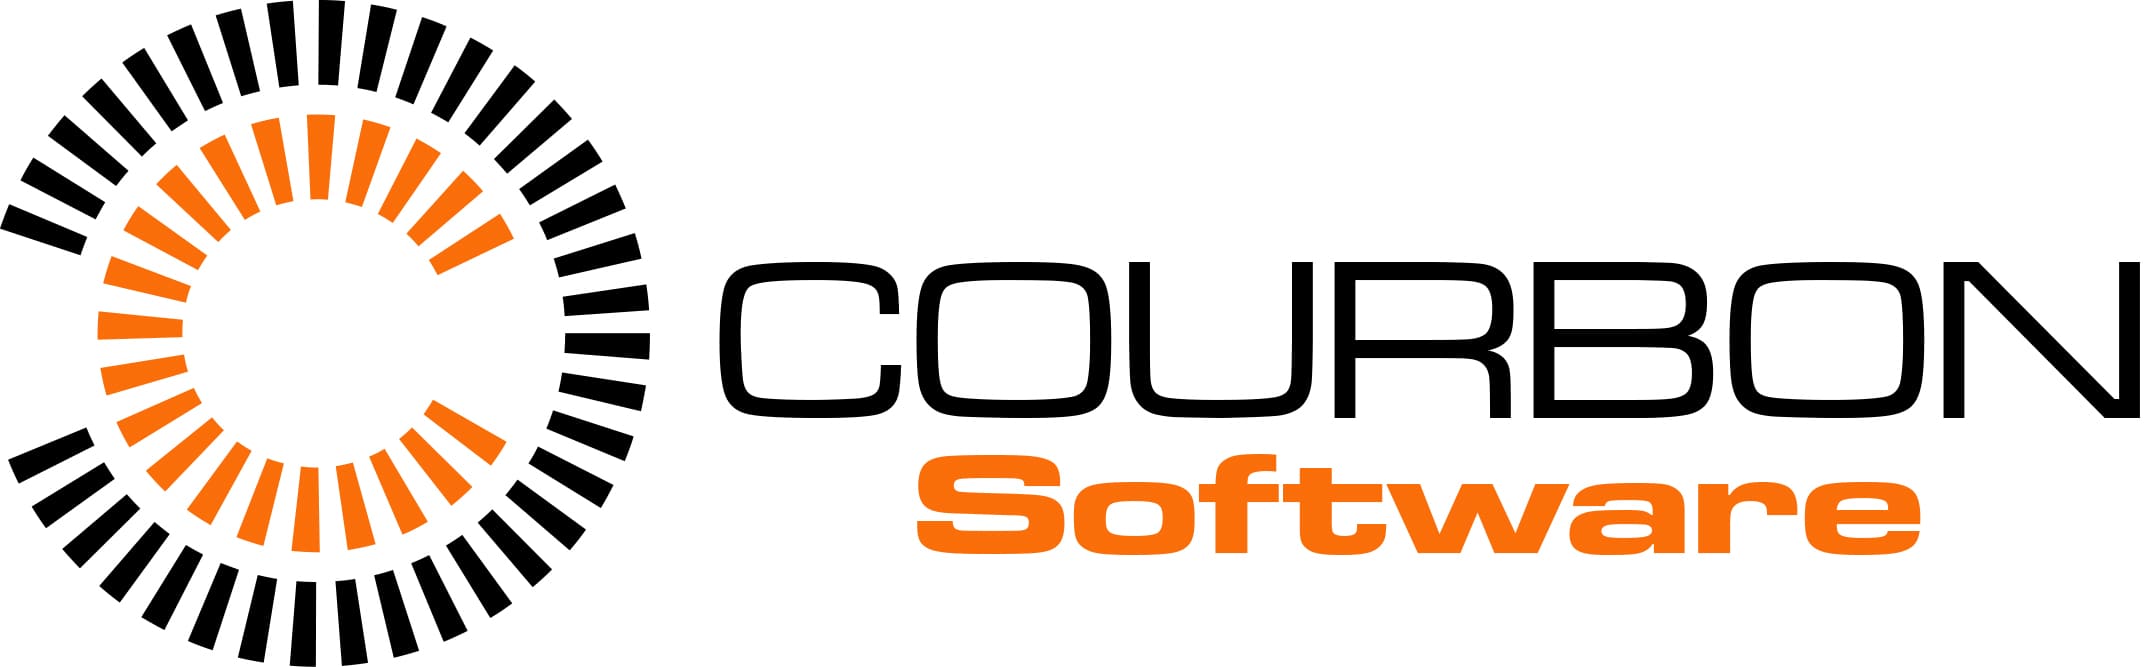 Courbon Software